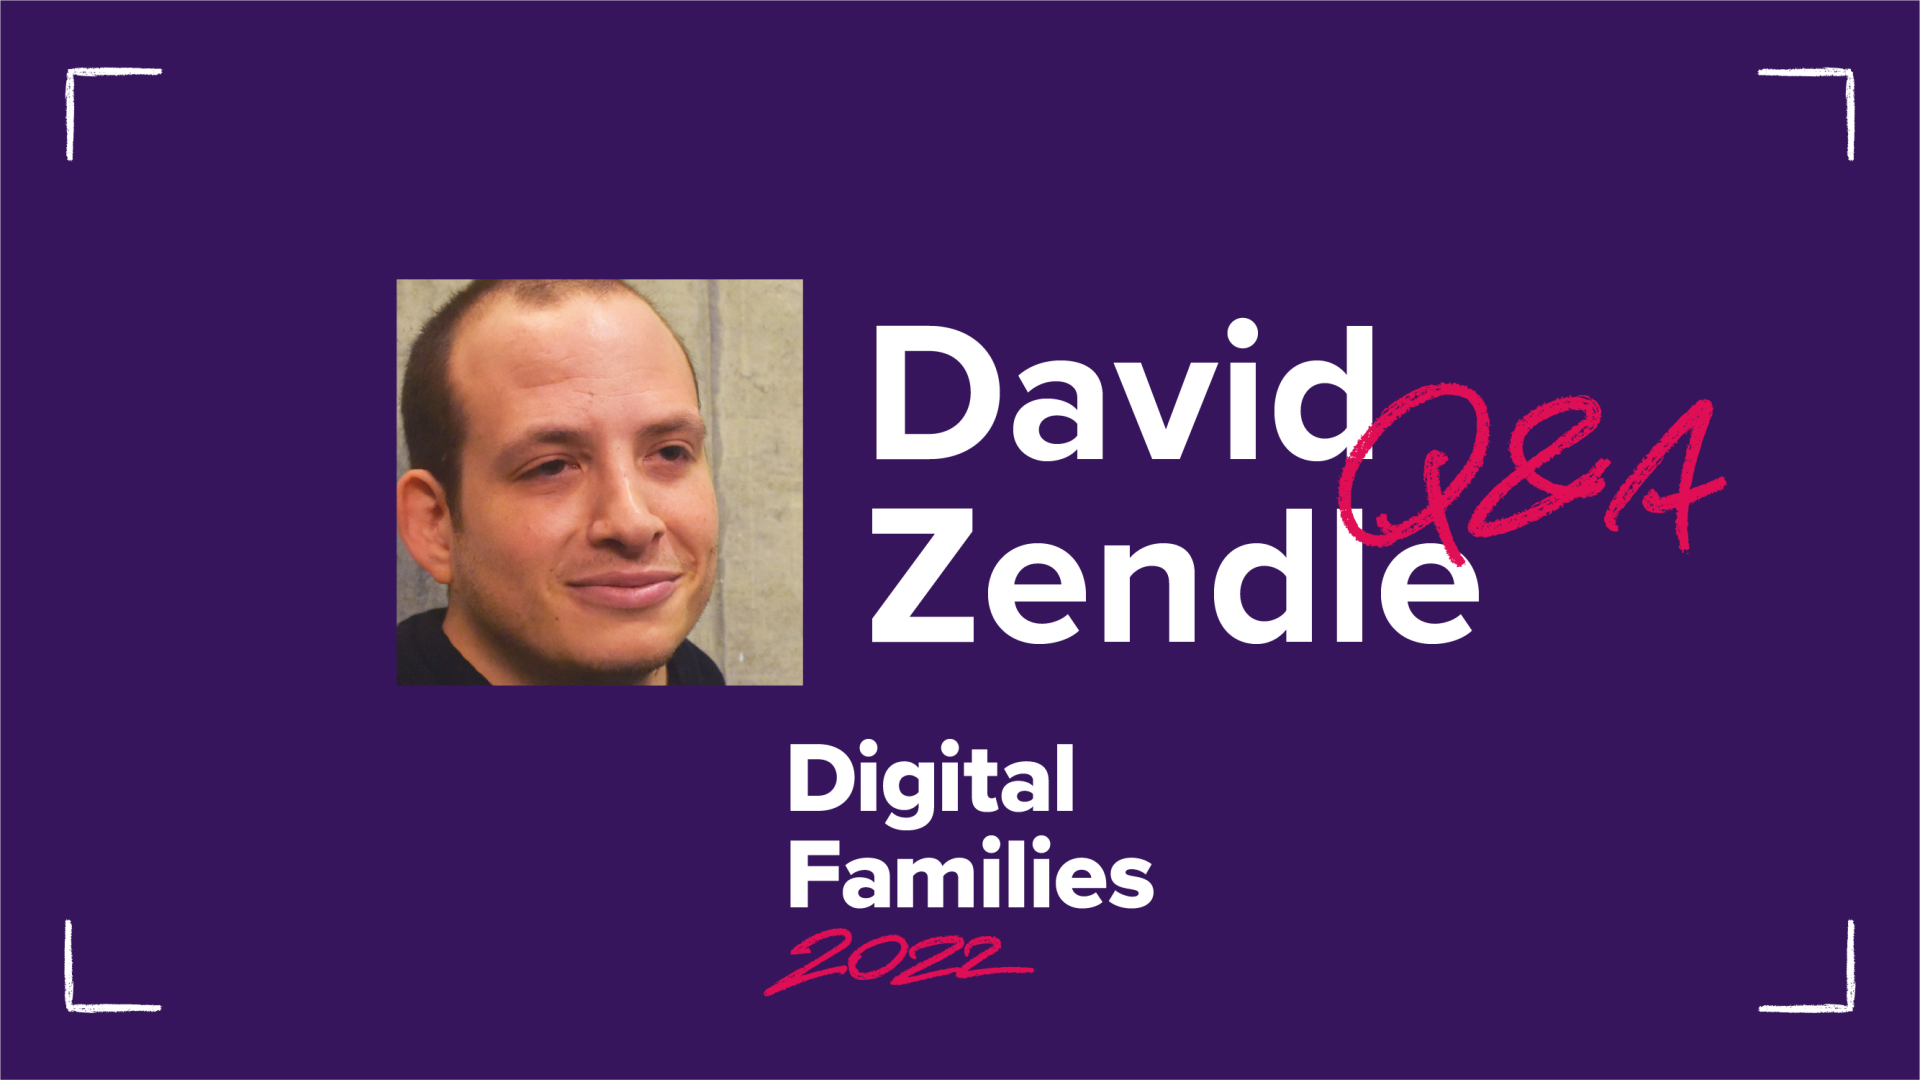 Digital Families 2022: Q&A with Dr David Zendle